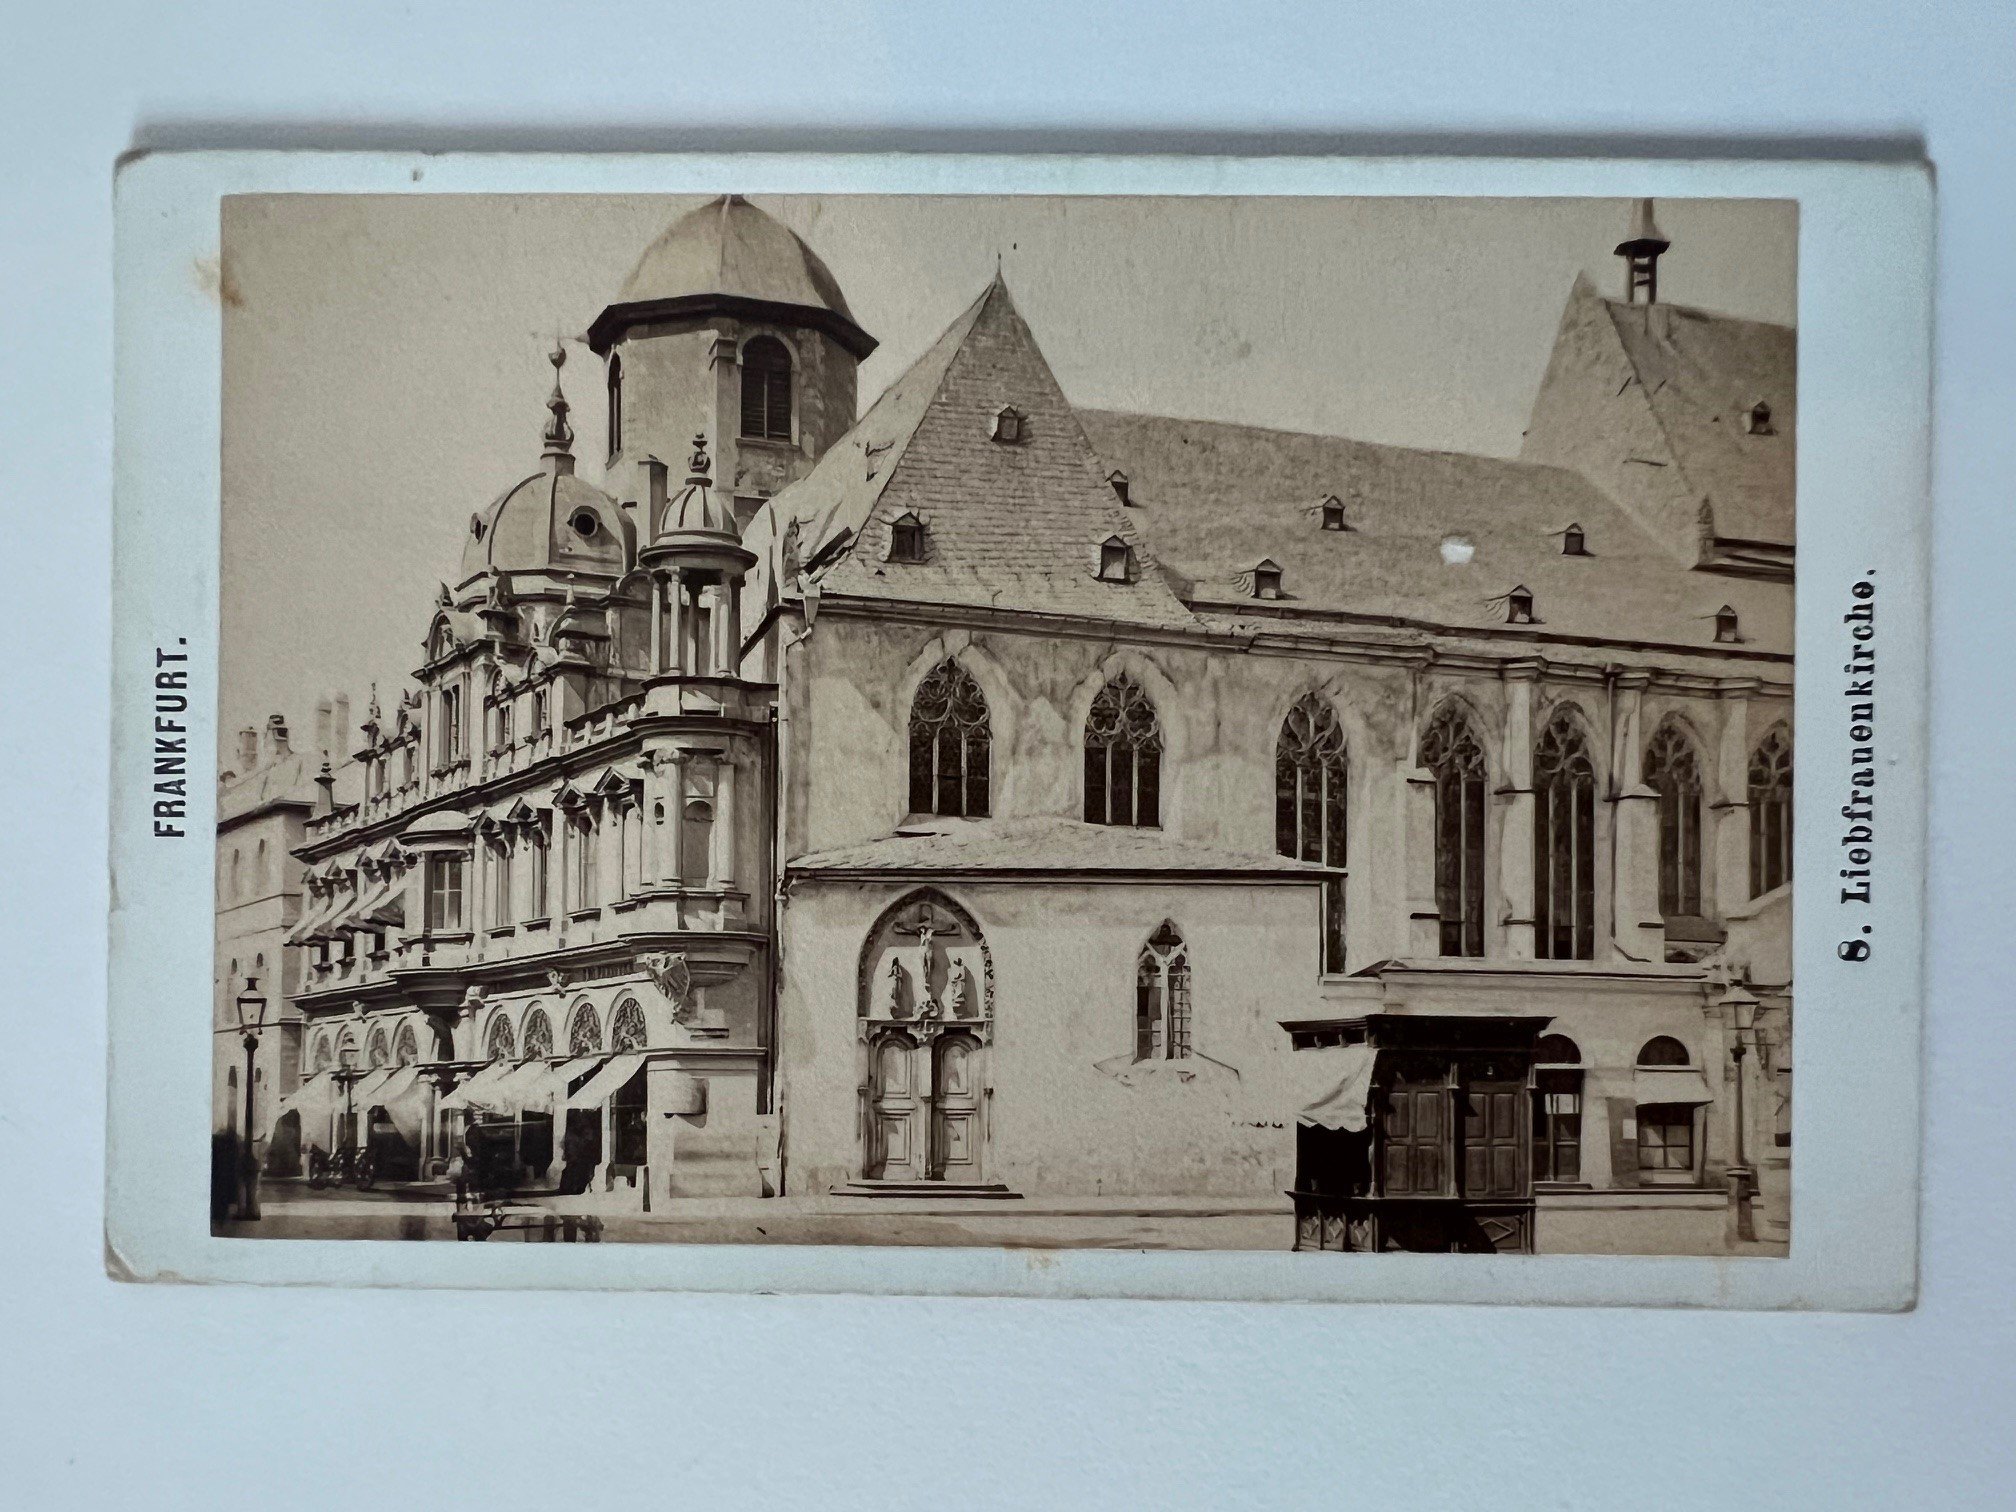 CdV, Frantisek Fridrich, Frankfurt, Nr. 8, Liebfrauenkirche, ca. 1875. (Taunus-Rhein-Main - Regionalgeschichtliche Sammlung Dr. Stefan Naas CC BY-NC-SA)